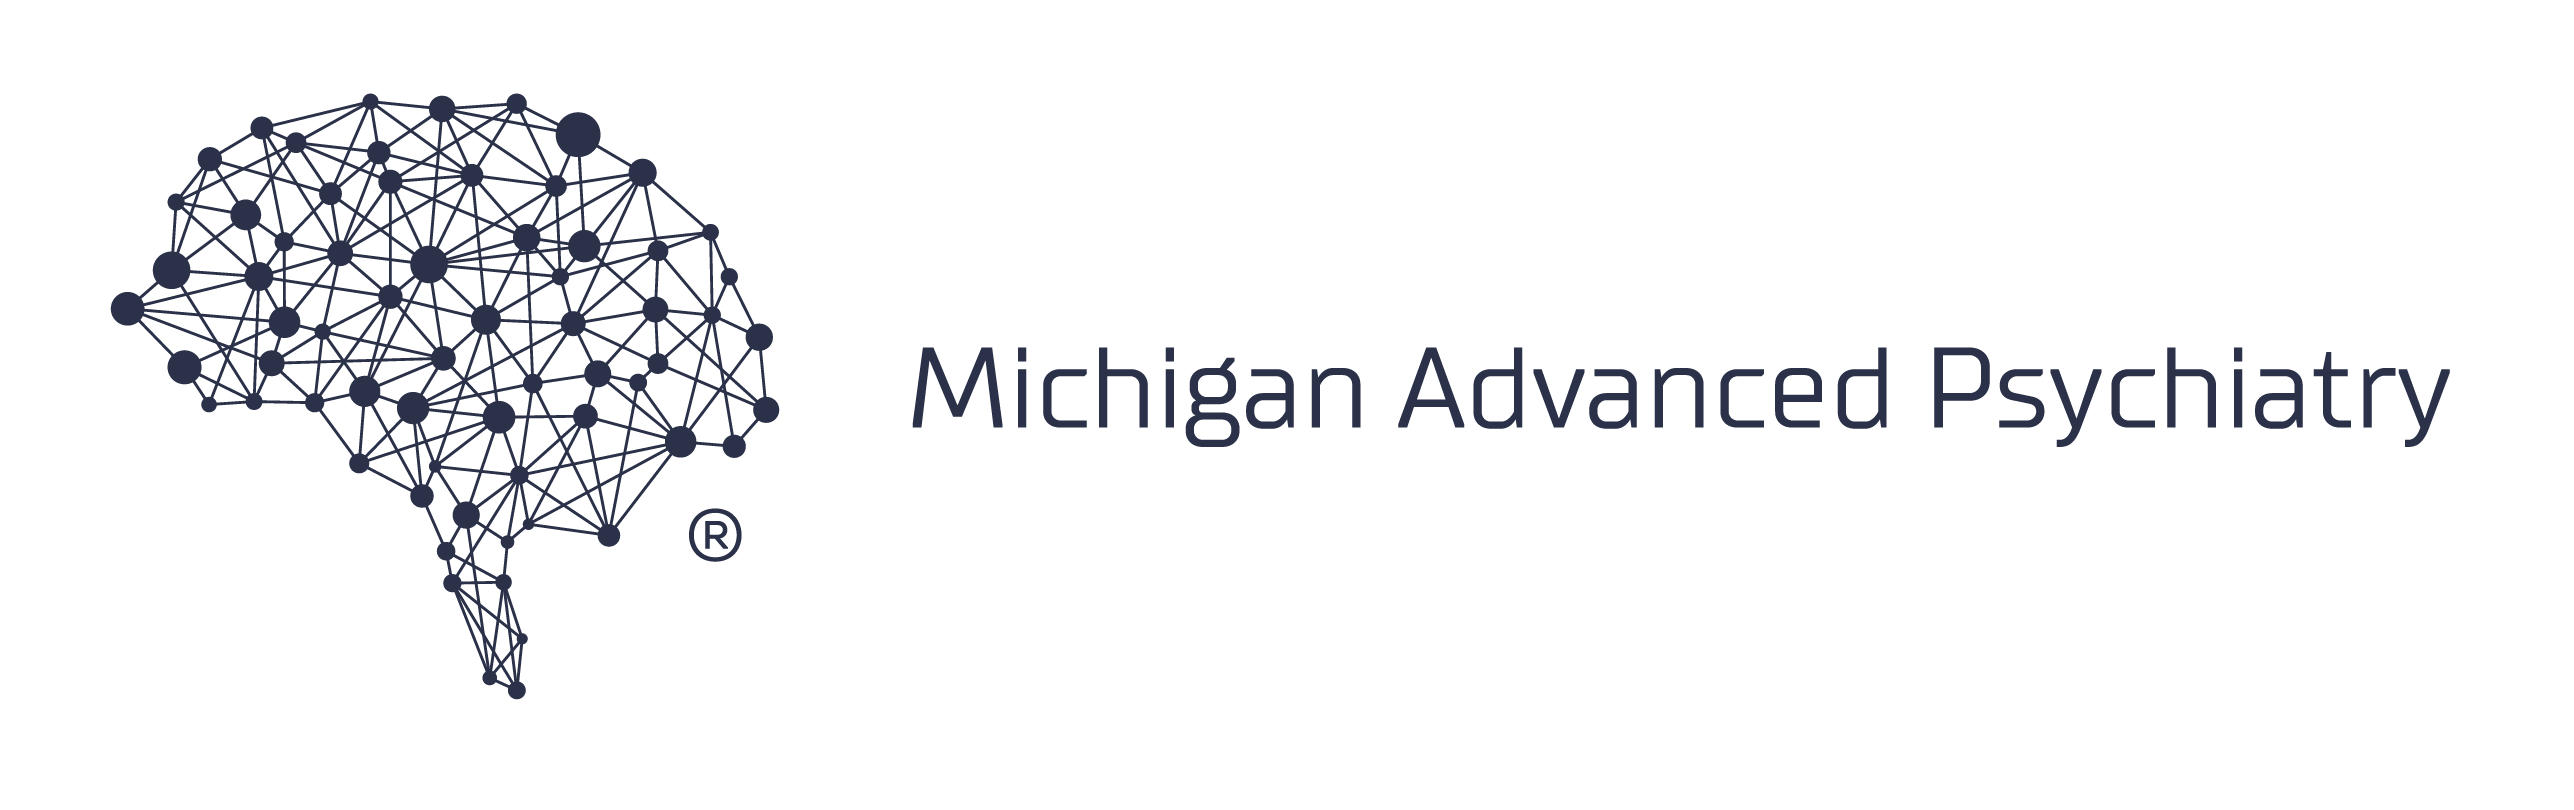 Michigan Advanced Psychiatry